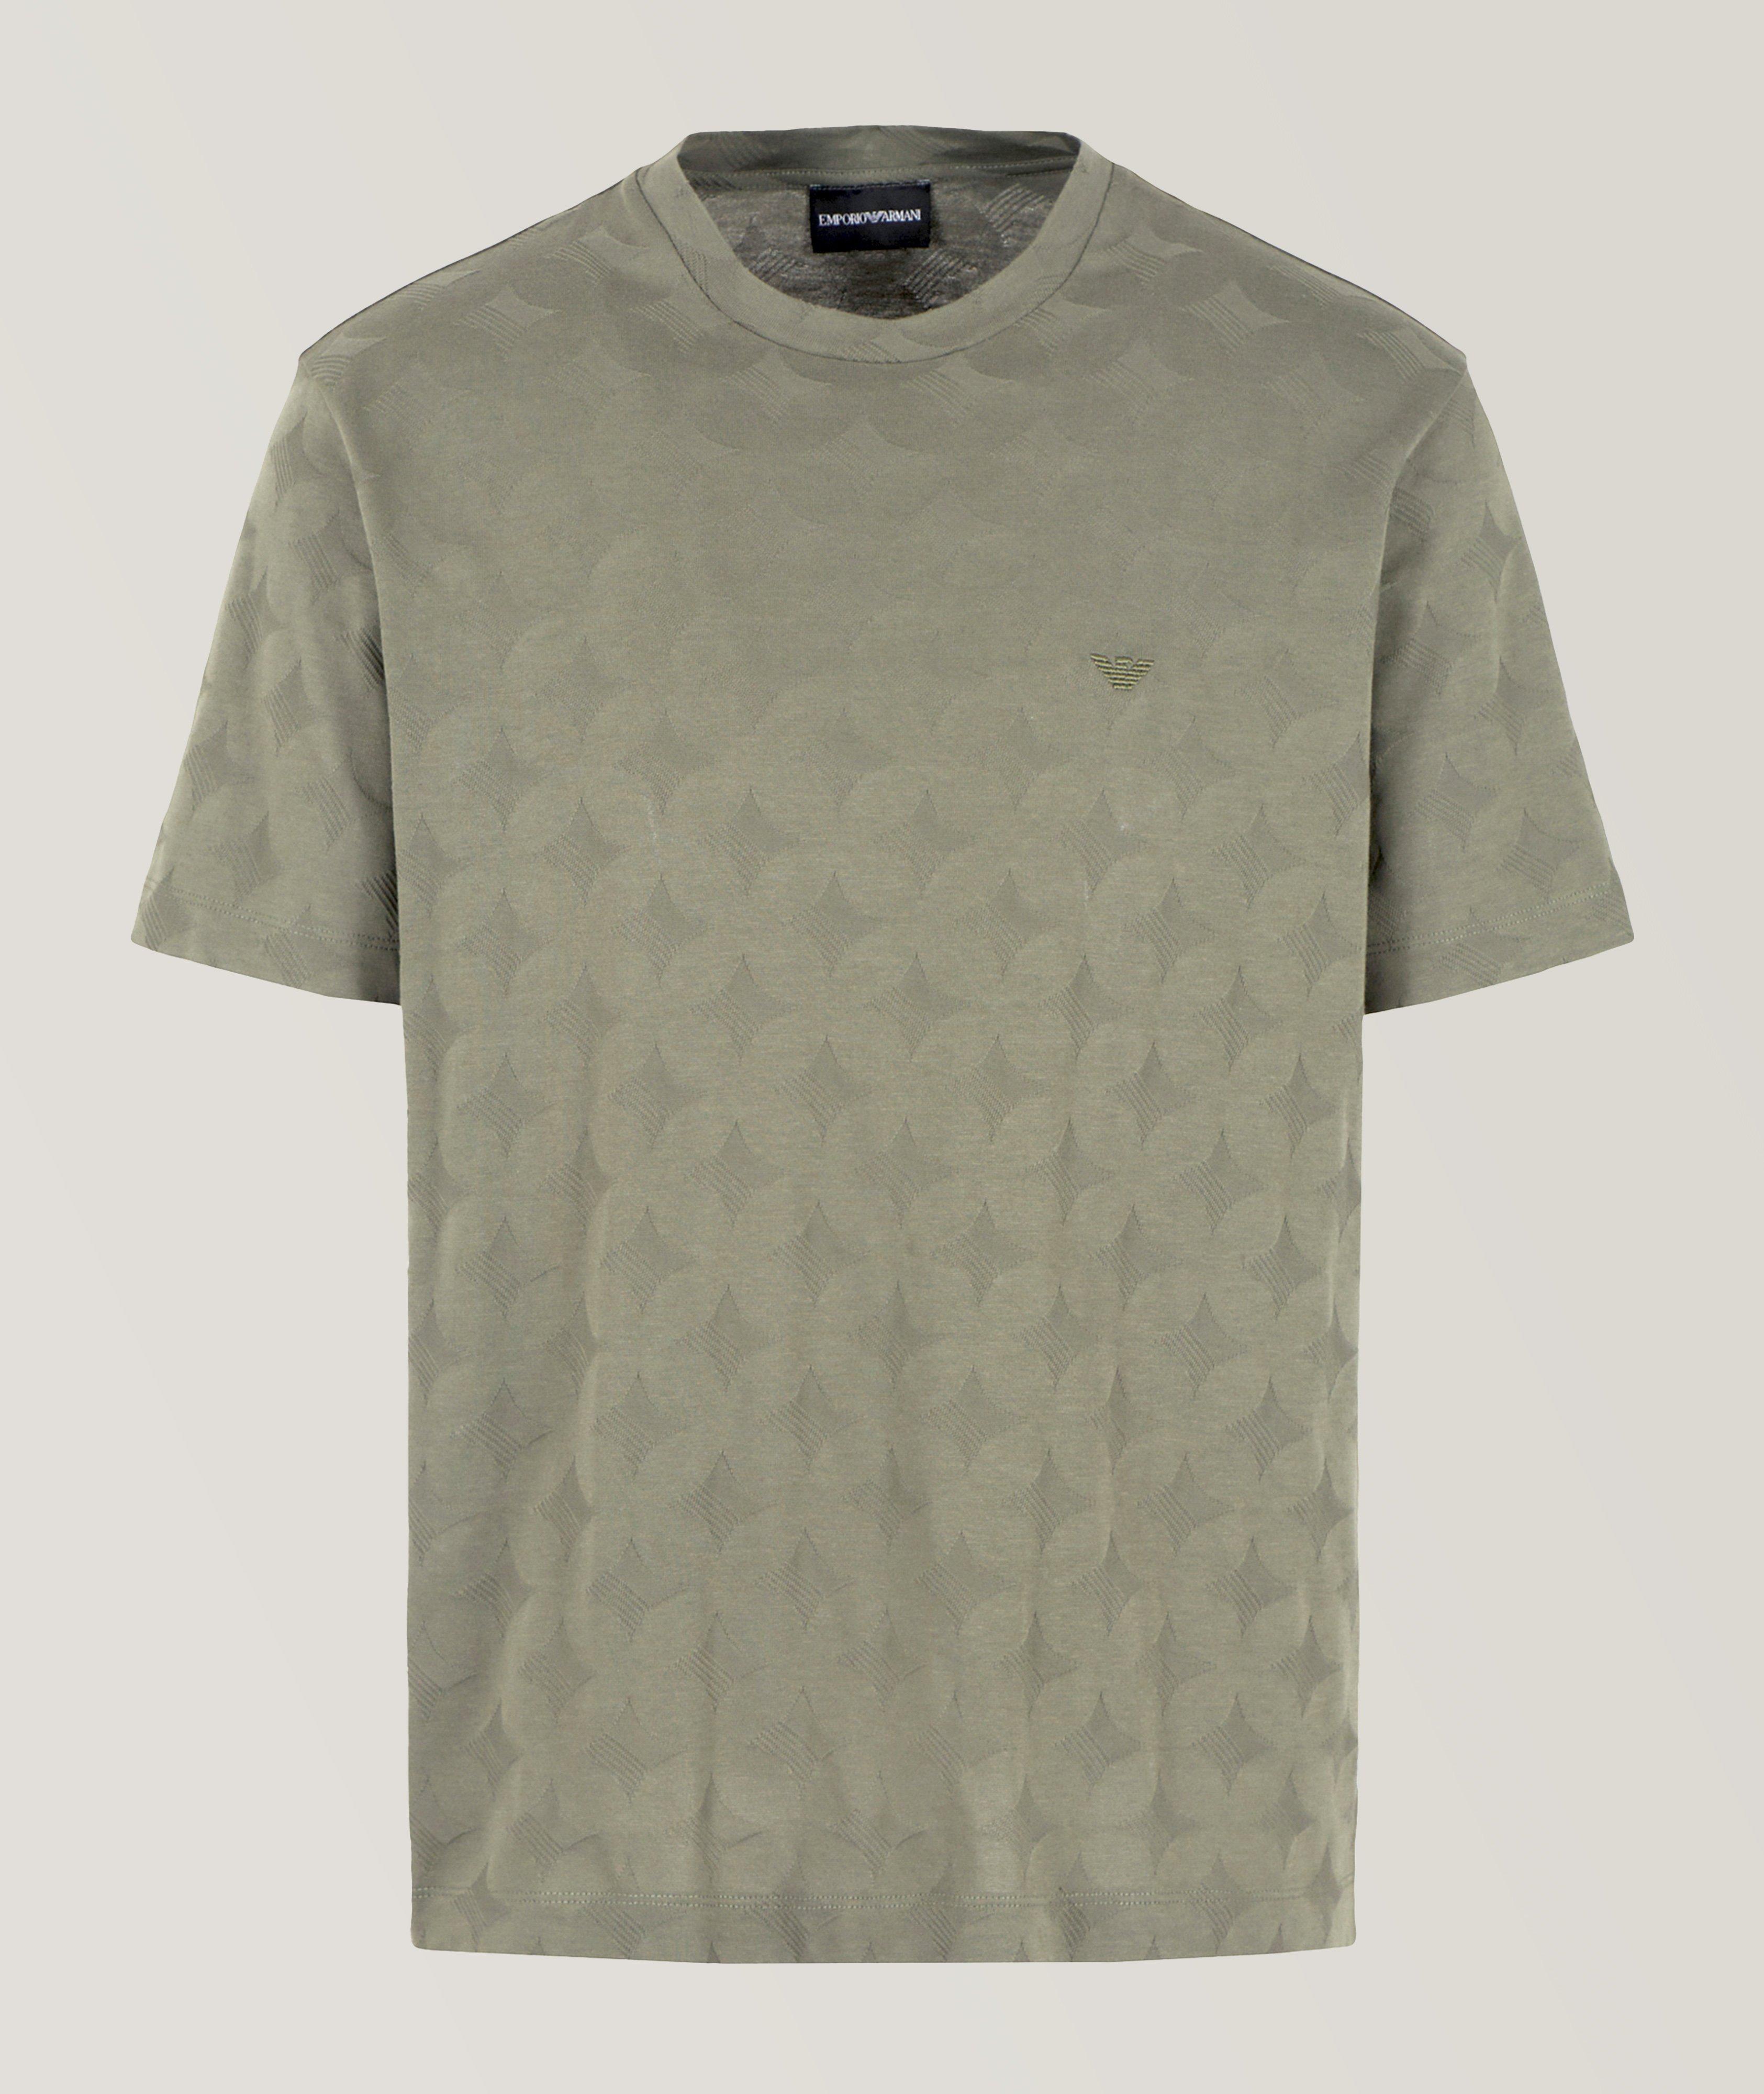 Monochrome Monogram Jacquard Cotton Jersey T-Shirt image 0